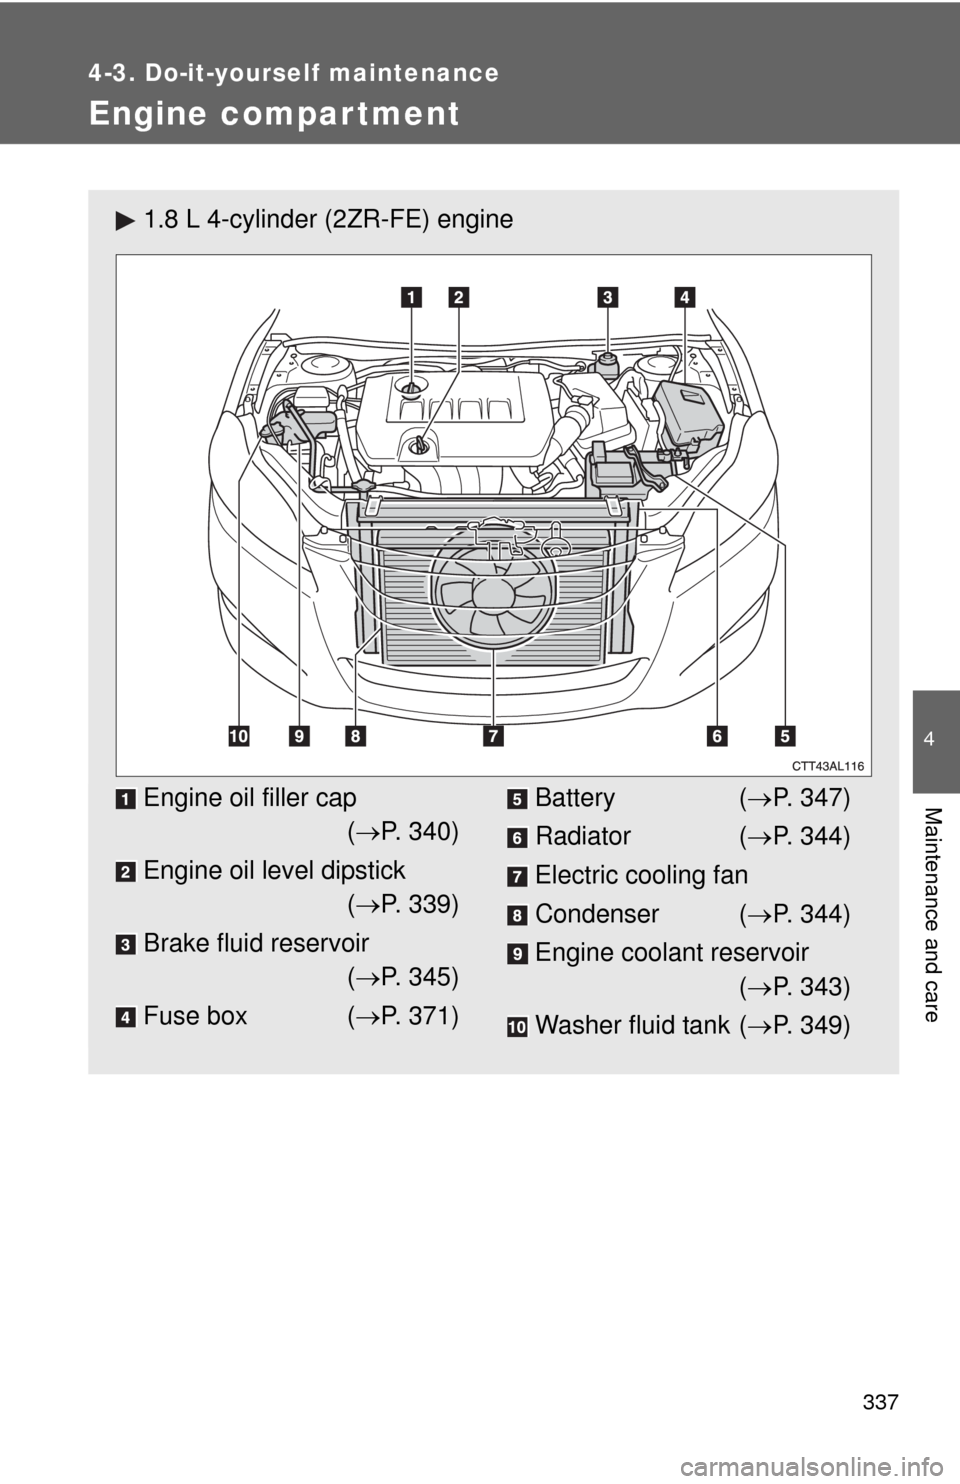 TOYOTA MATRIX 2011 E140 / 2.G Owners Manual 337
4-3. Do-it-yourself maintenance
4
Maintenance and care
Engine compar tment
1.8 L 4-cylinder (2ZR-FE) engine
Engine oil filler cap
(P. 340)
Engine oil level dipstick
(P. 339)
Brake fluid rese